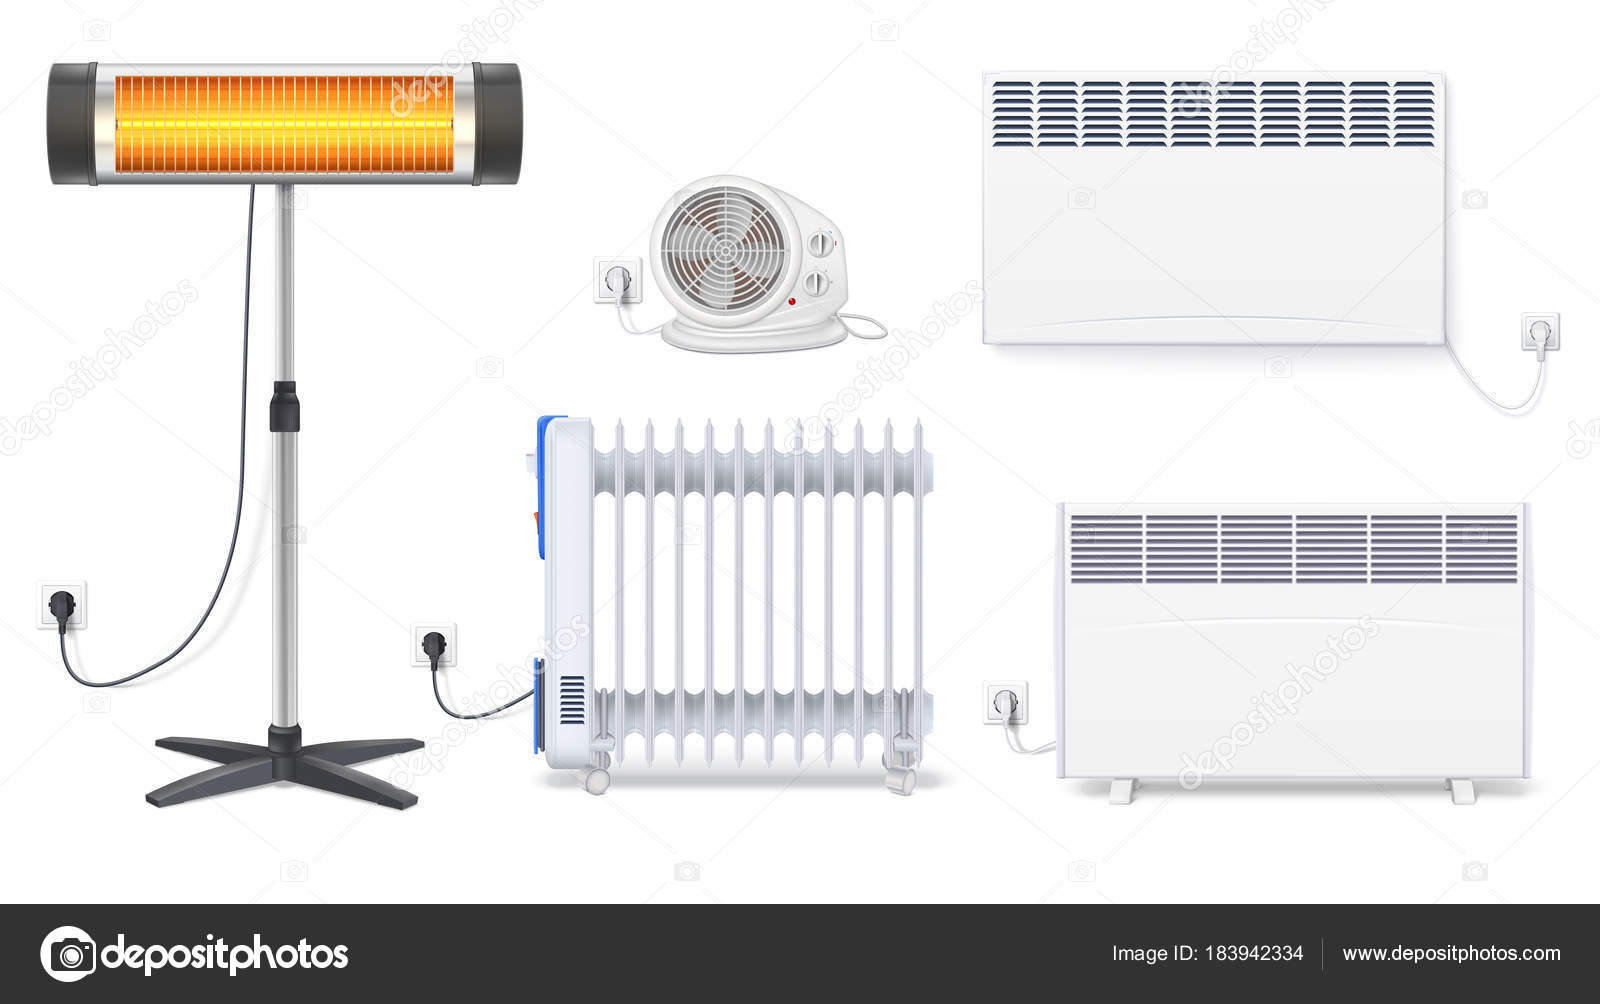 https://st3.depositphotos.com/1531183/18394/v/1600/depositphotos_183942334-stock-illustration-panel-of-radiator-electric-oil.jpg